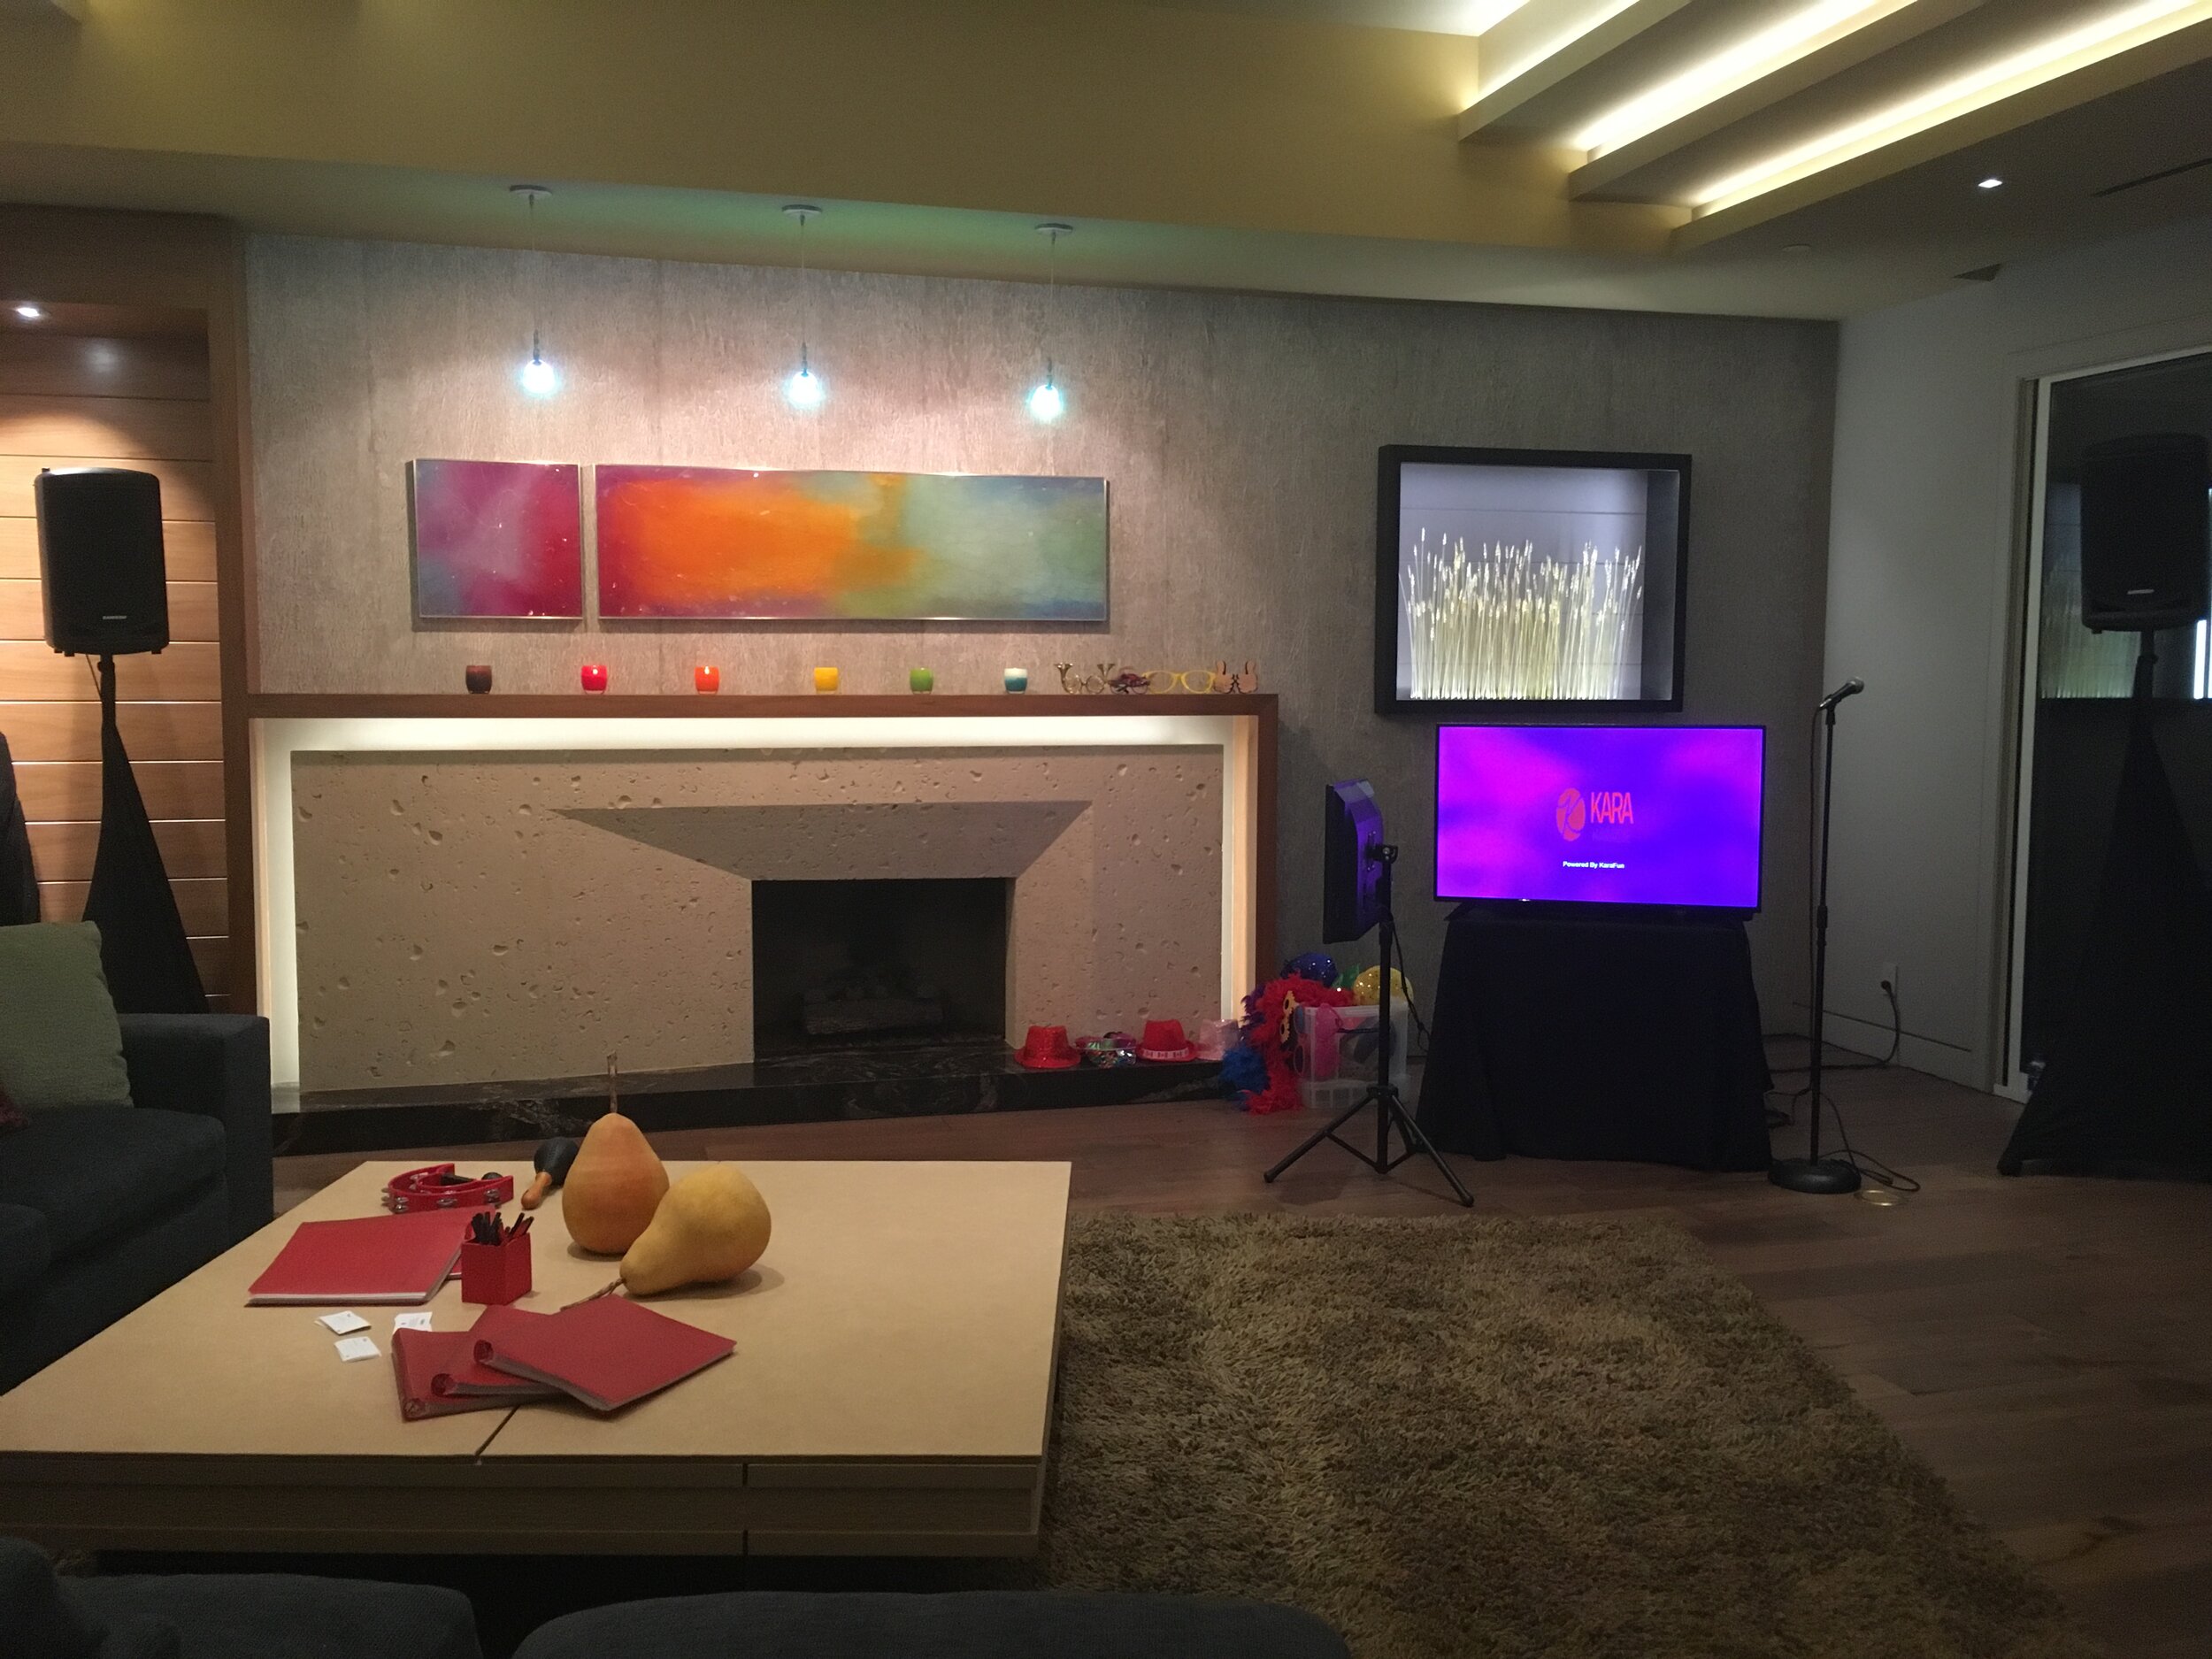 Kara Karaoke - Living Room Set Up 6.JPG